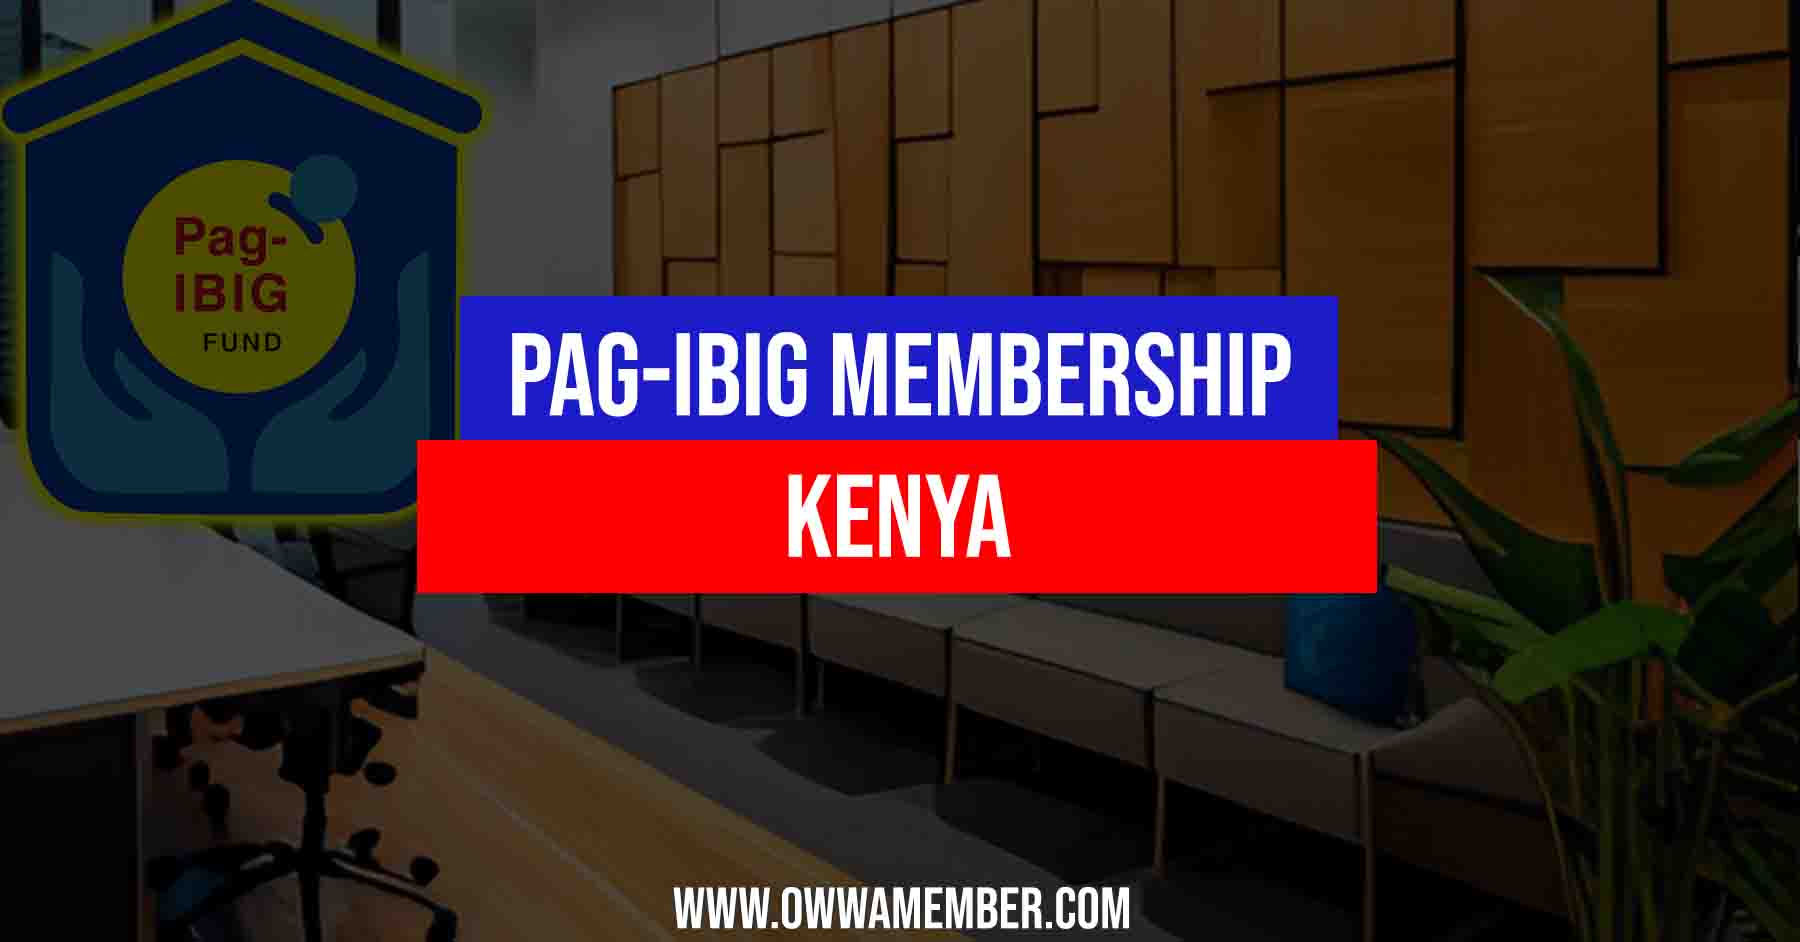 apply pag-ibig membership in kenya for ofw